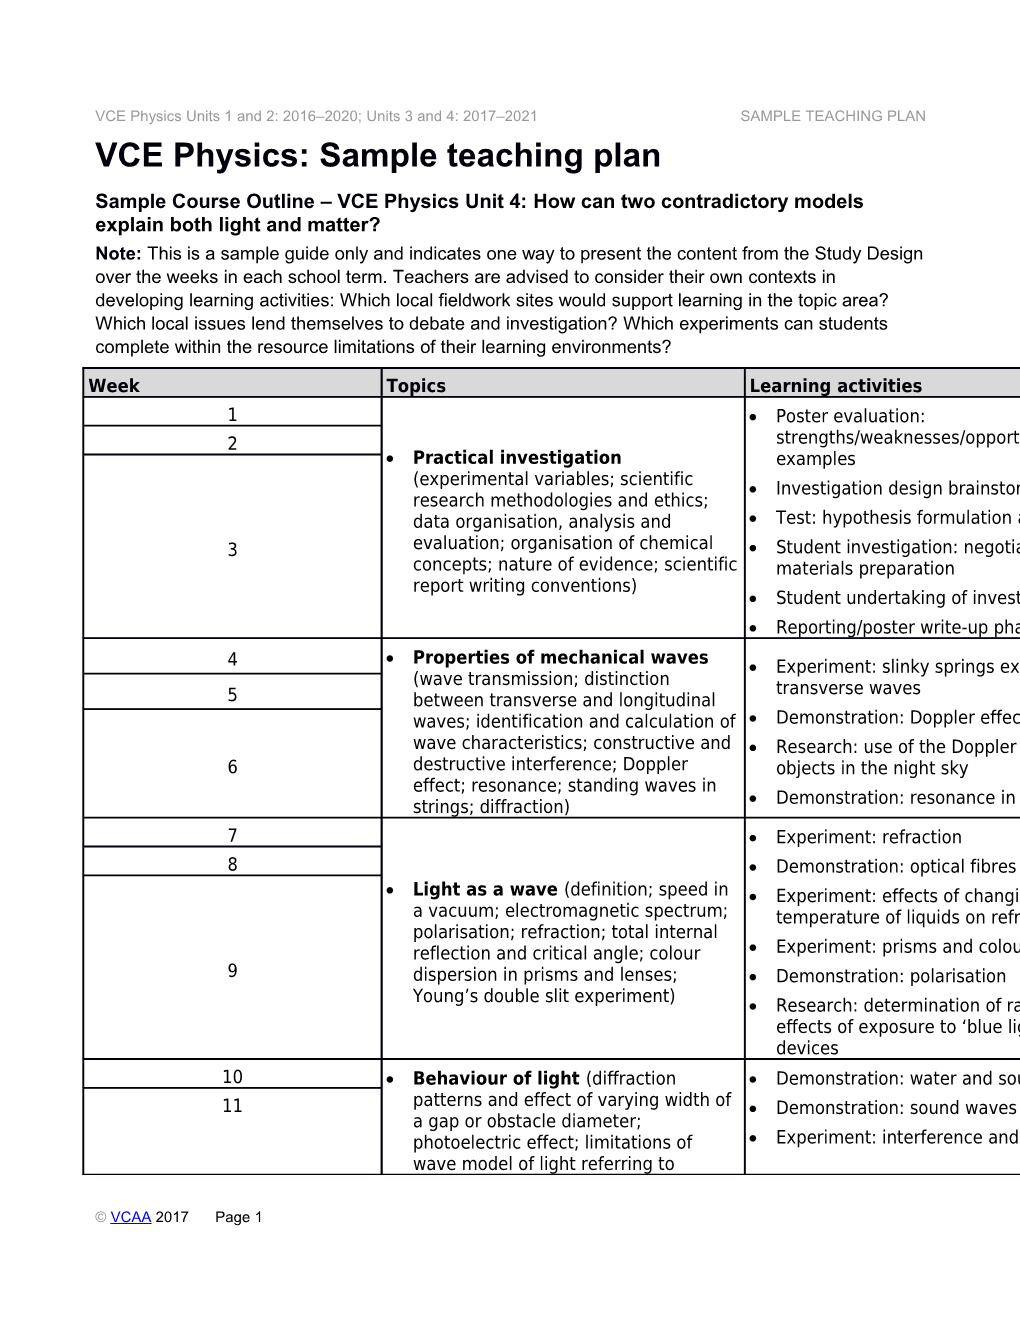 VCE Physics: Sample Teaching Plan